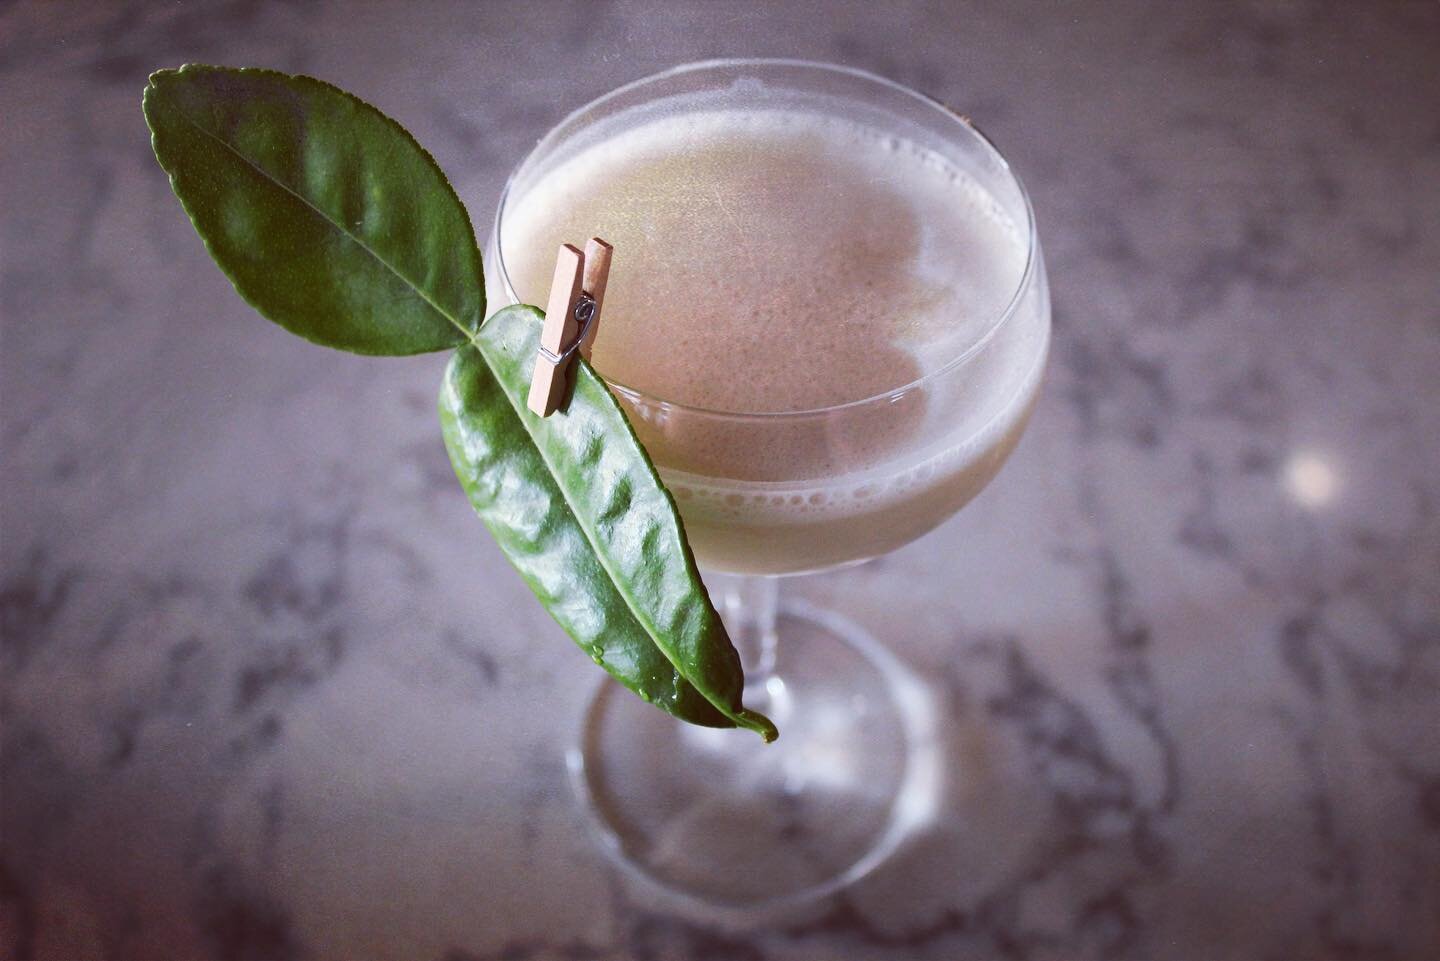 New cocktail menu debuts tonight! 📷: Bwason Pou Bonte
@saintbenevolence Aged Rum
Banana Liqueur | Coconut Milk
Kaffir Leaf Syrup | Lime Juice
#drinktogoodness #imbibegram